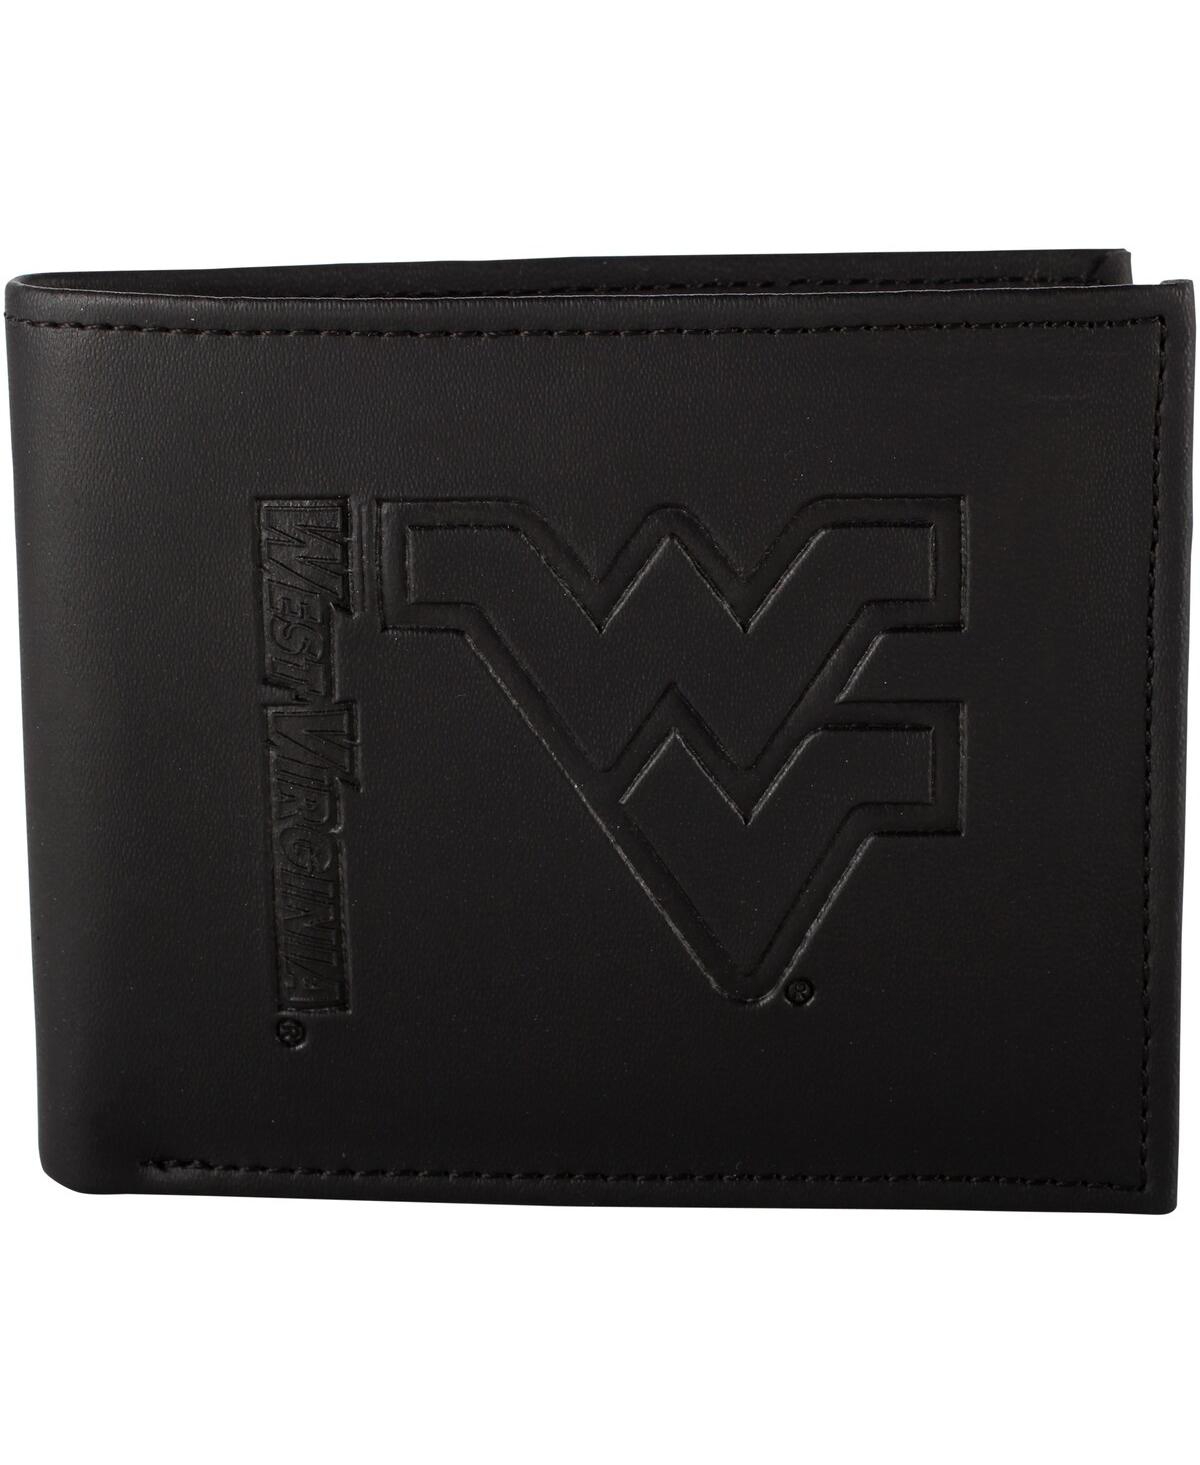 Shop Evergreen Enterprises Men's Black West Virginia Mountaineers Hybrid Bi-fold Wallet